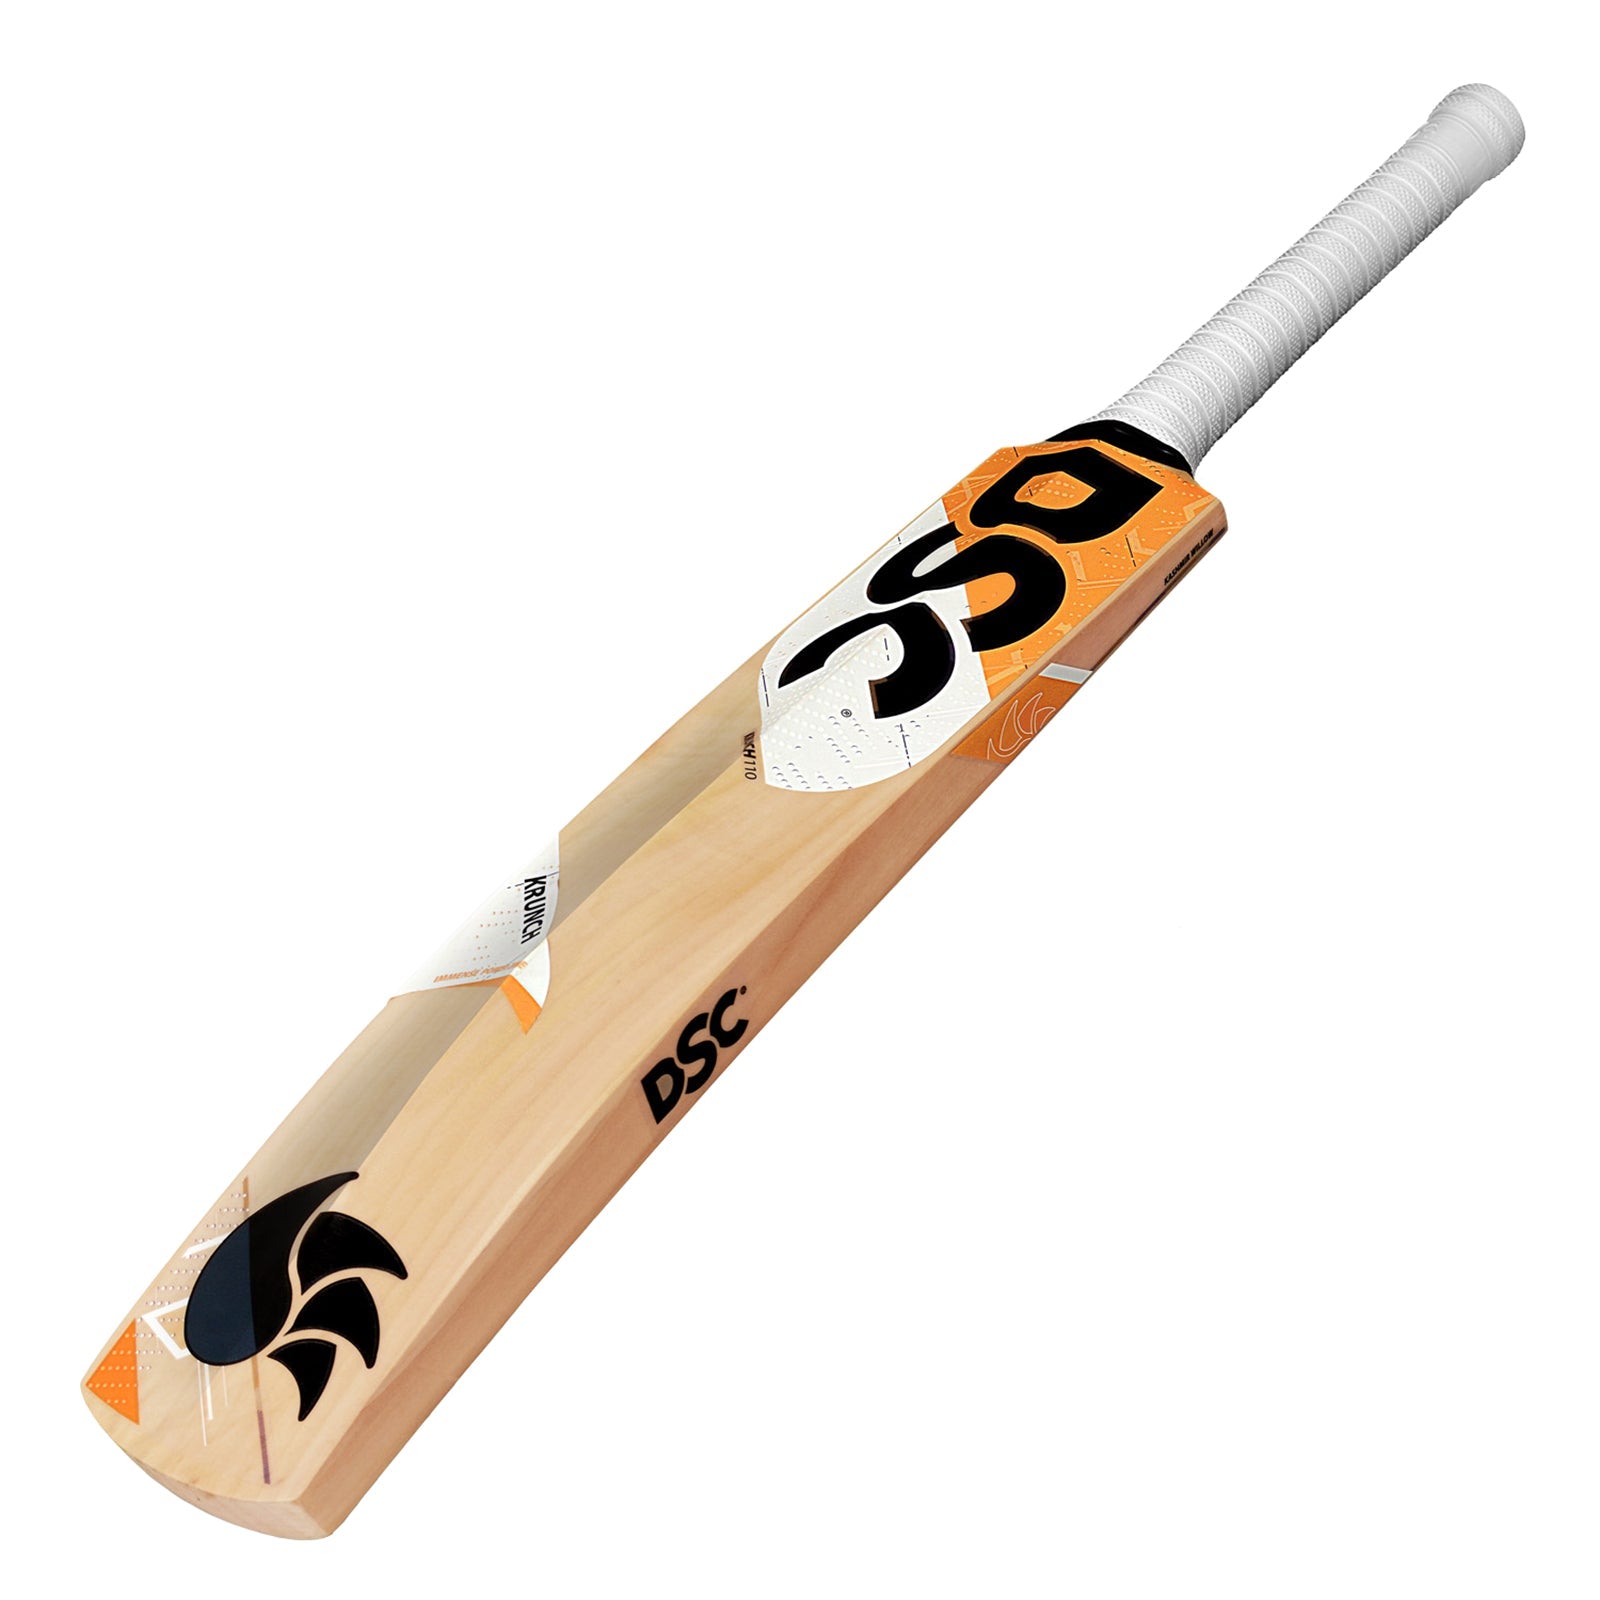 DSC Krunch 110 Kashmir Willow Cricket Bat - Size 6